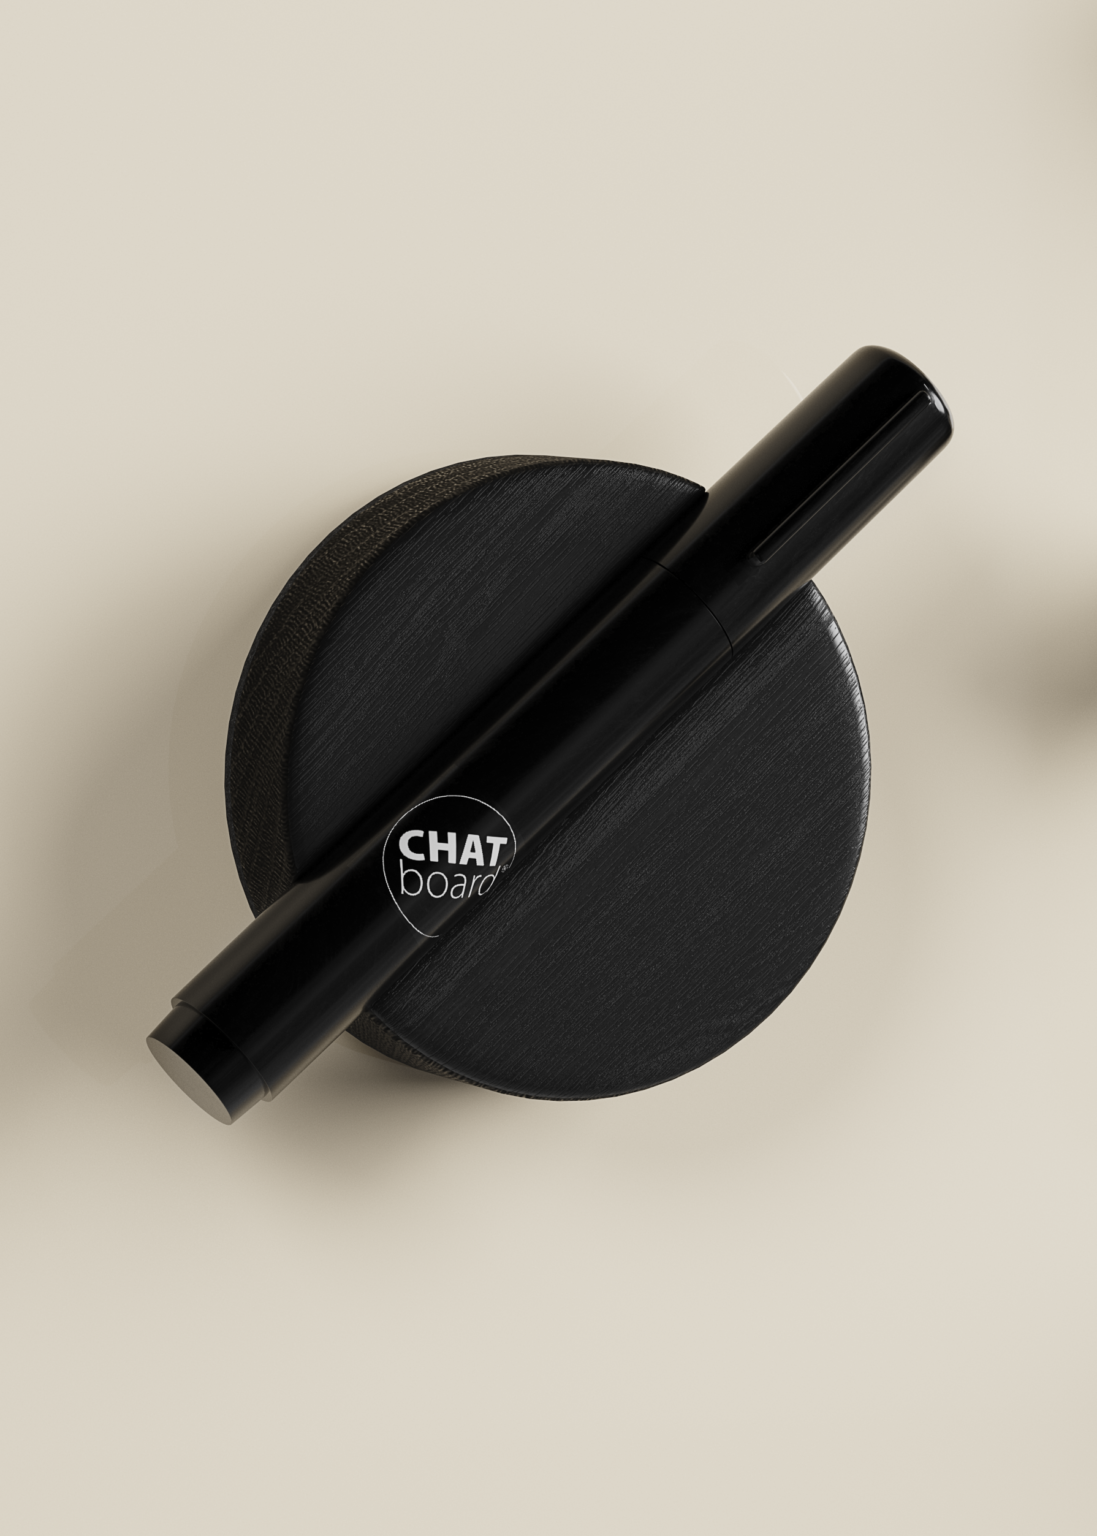 CHAT-BOARD-DISCO-Eraser-Black-oak-closeup-portrait-1097x1536